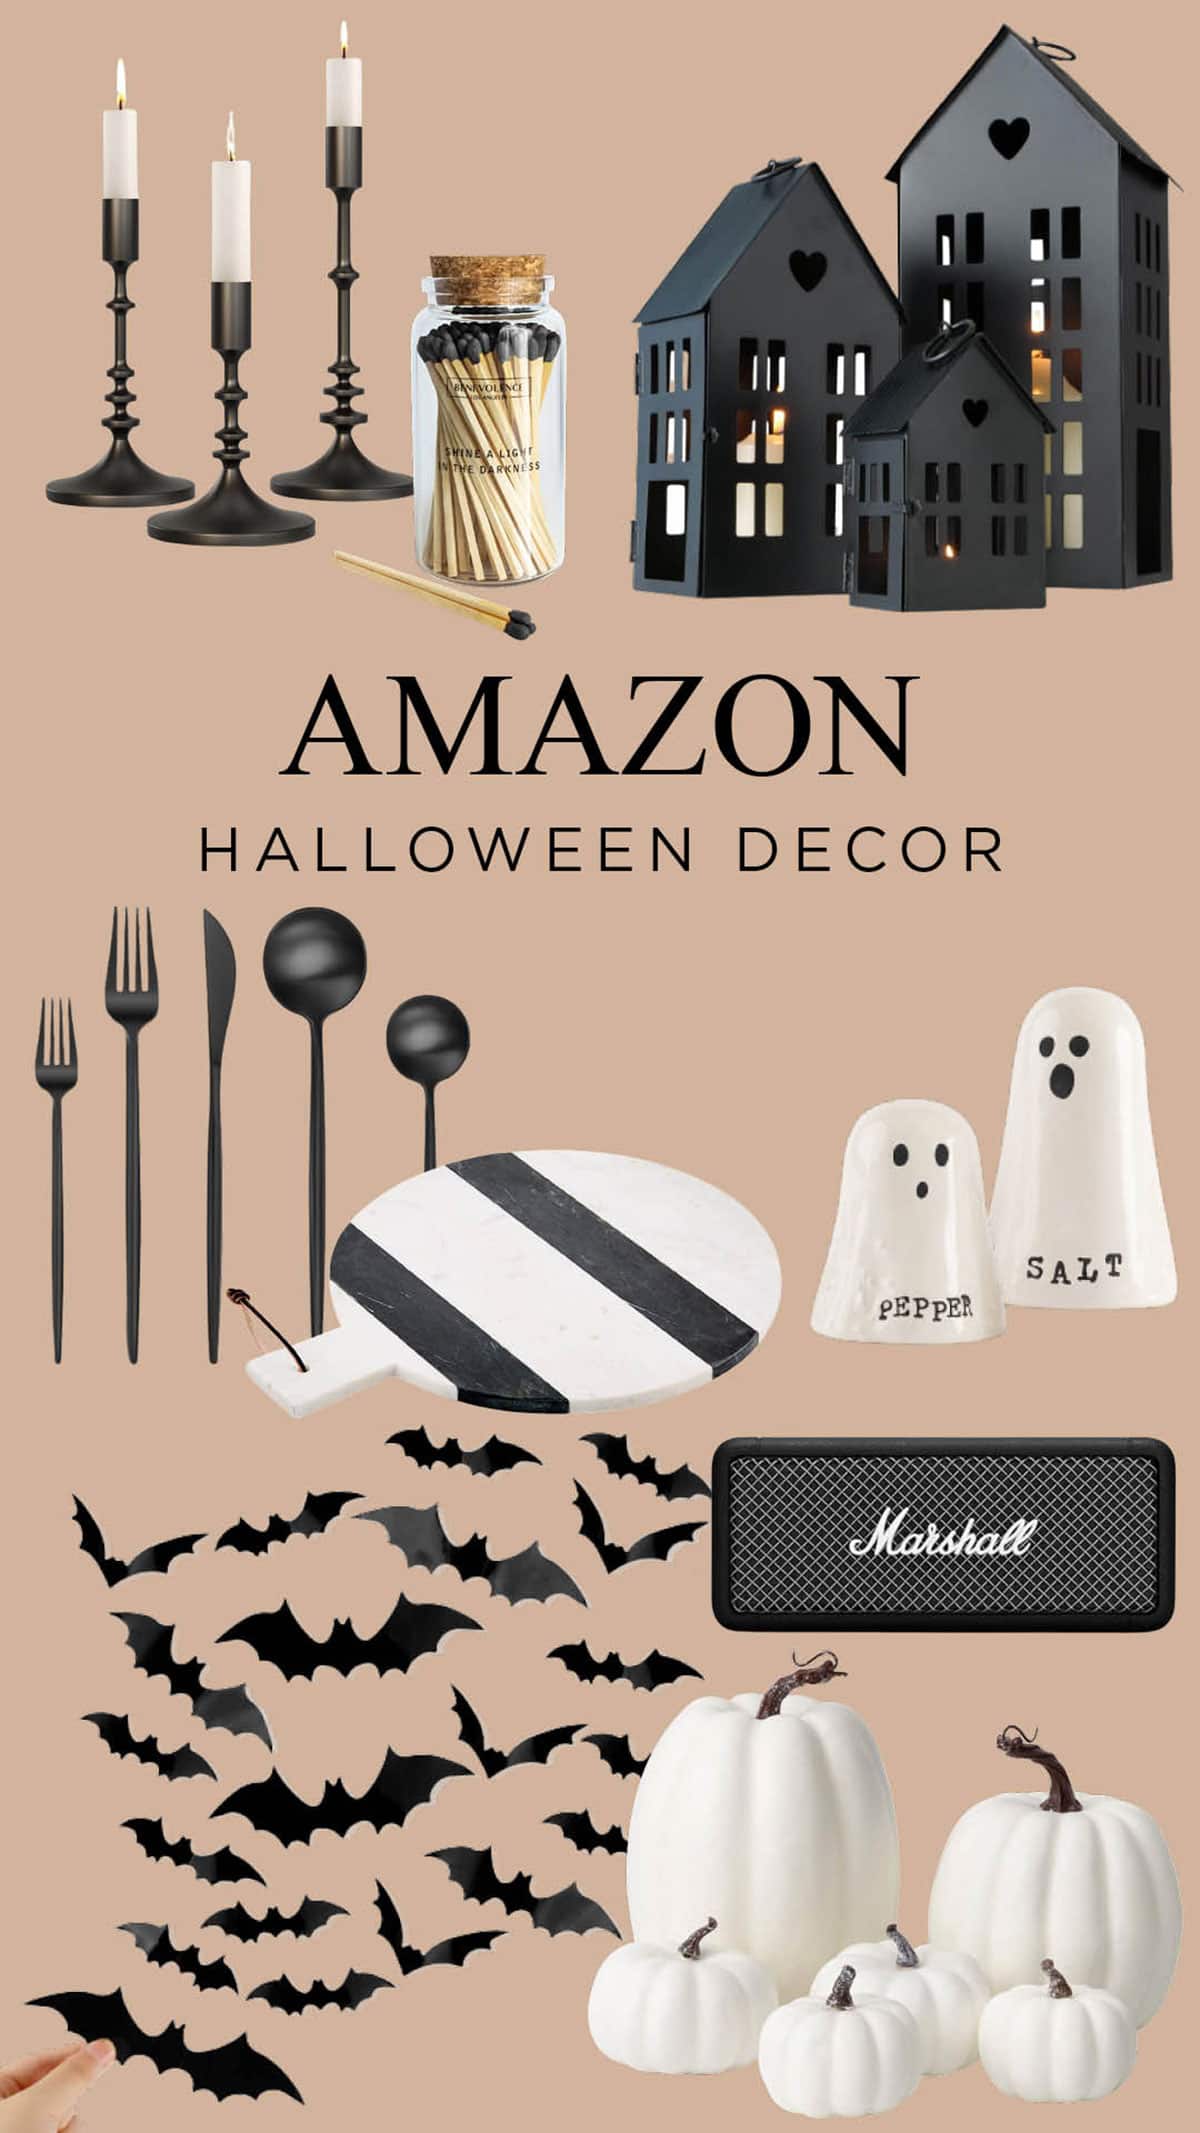 Amazon Prime Sale - Halloween decor